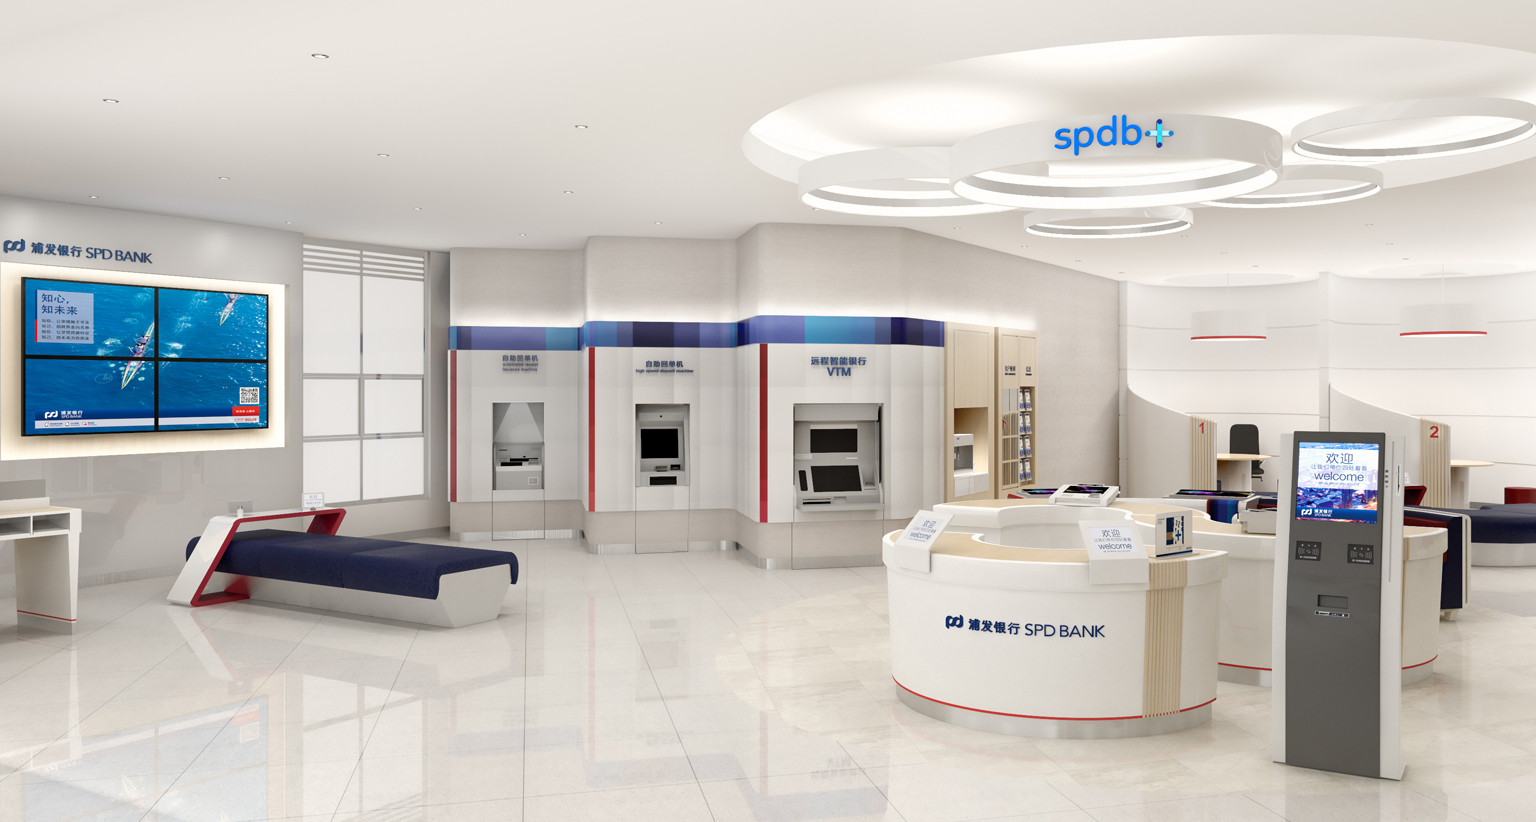 Спд банк. SPD Bank. СПД дизайн. Bank Branch. Bank Swiss Interior.